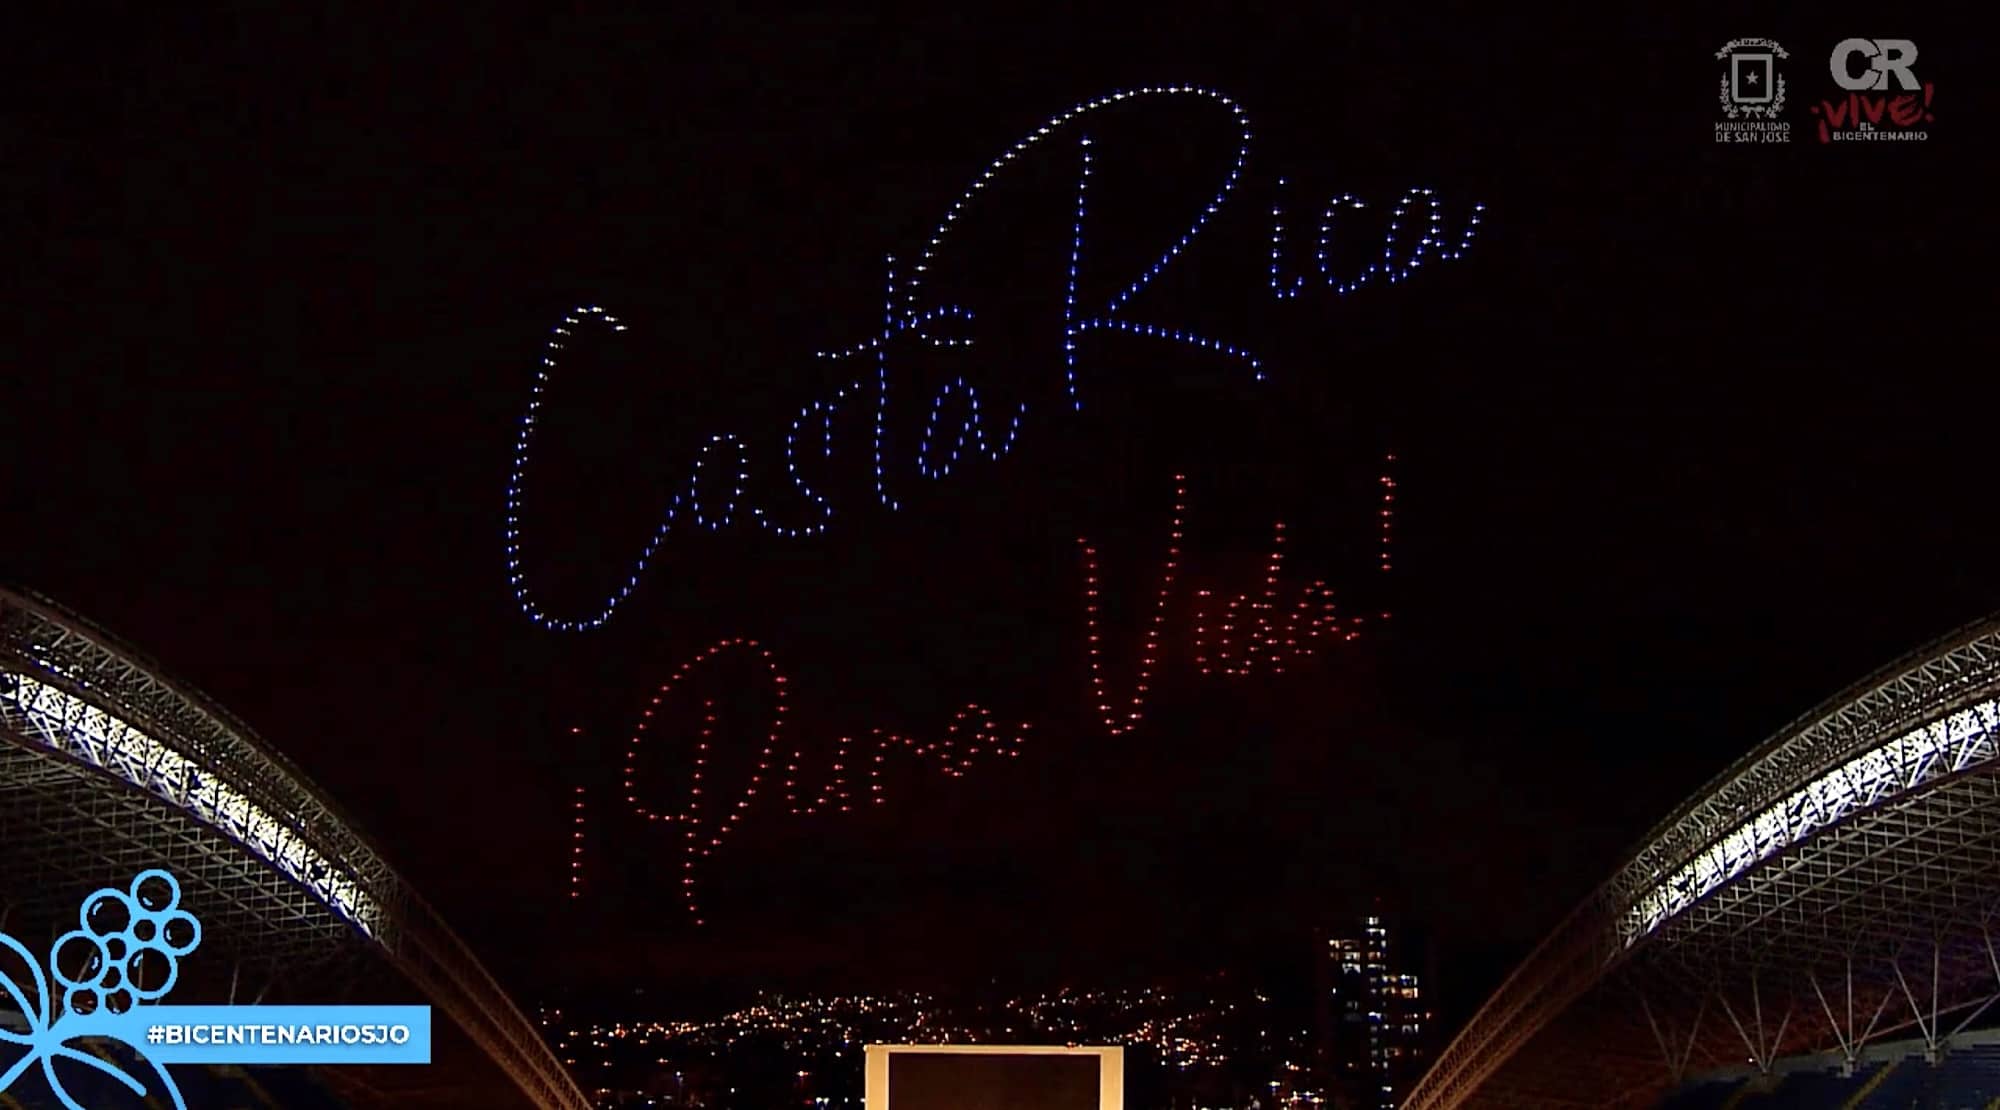 Drones spell “Costa Rica” and “Pura Vida” in the sky above the National Stadium in La Sabana, Costa Rica.